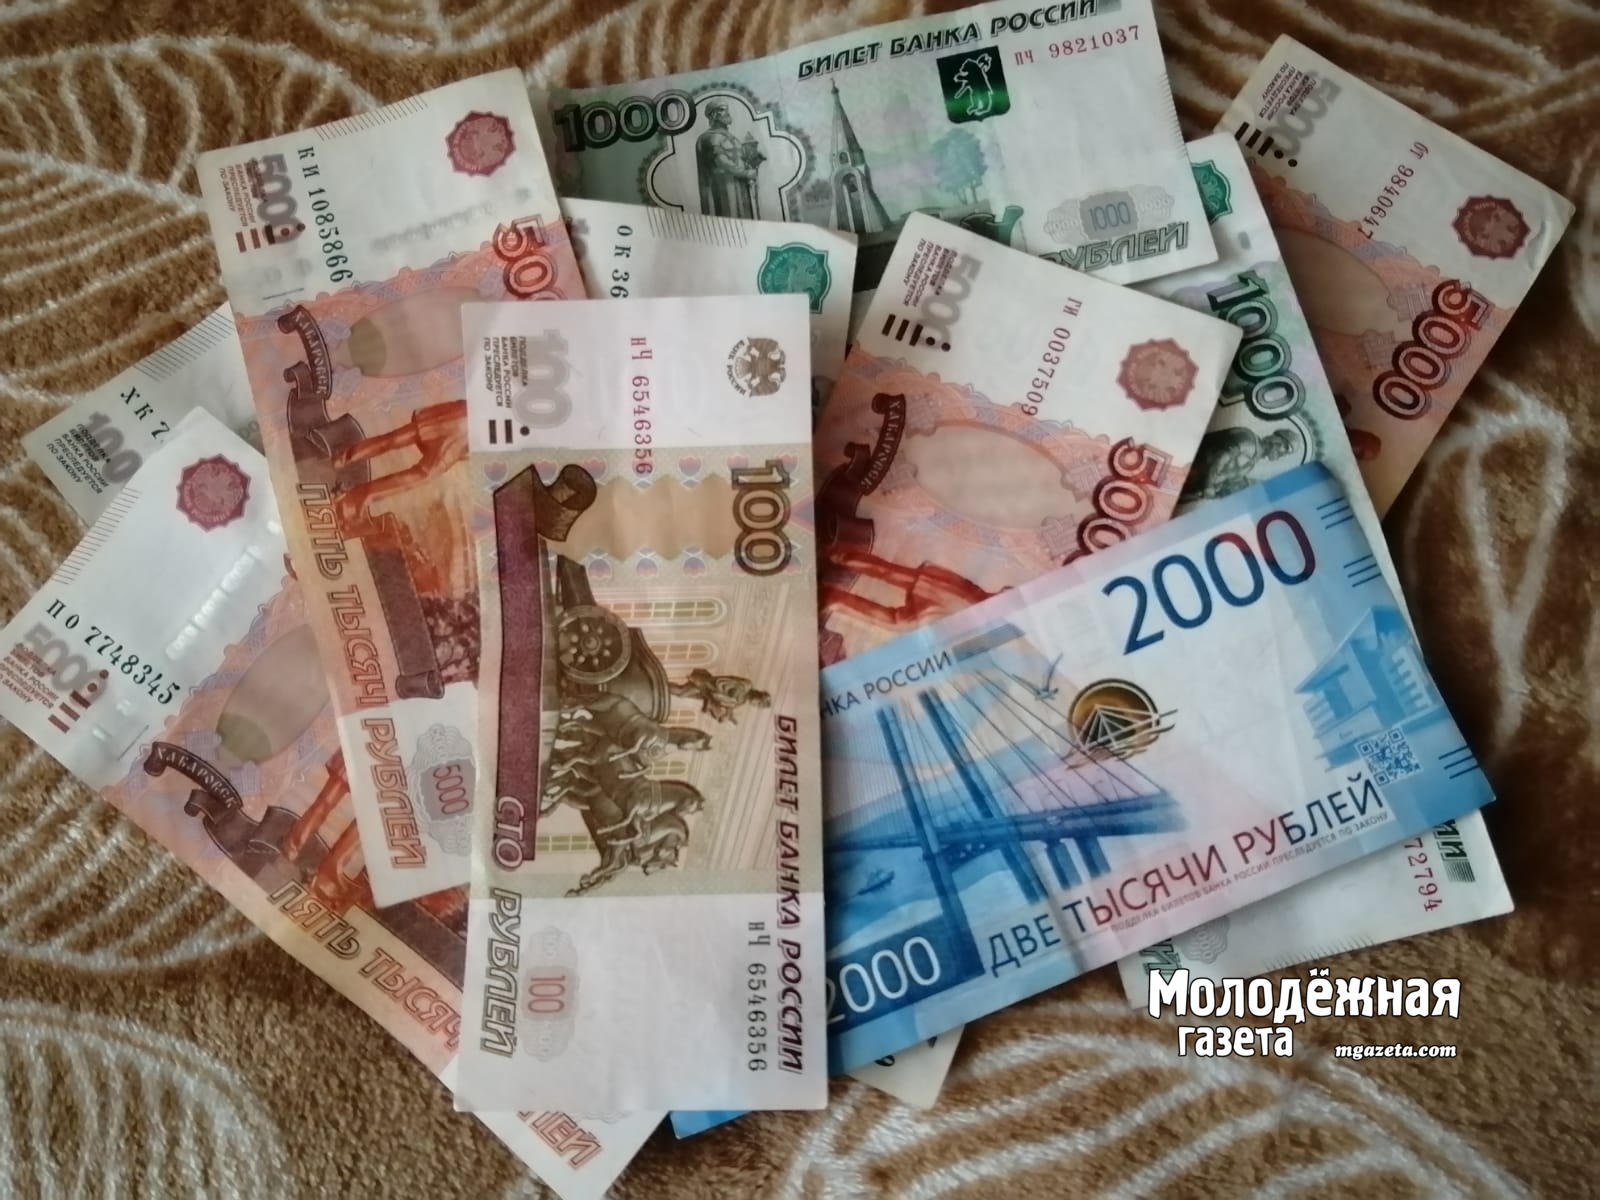 Мошенники обманули 80-летнюю бабушку из Башкирии и забрали все ее деньги